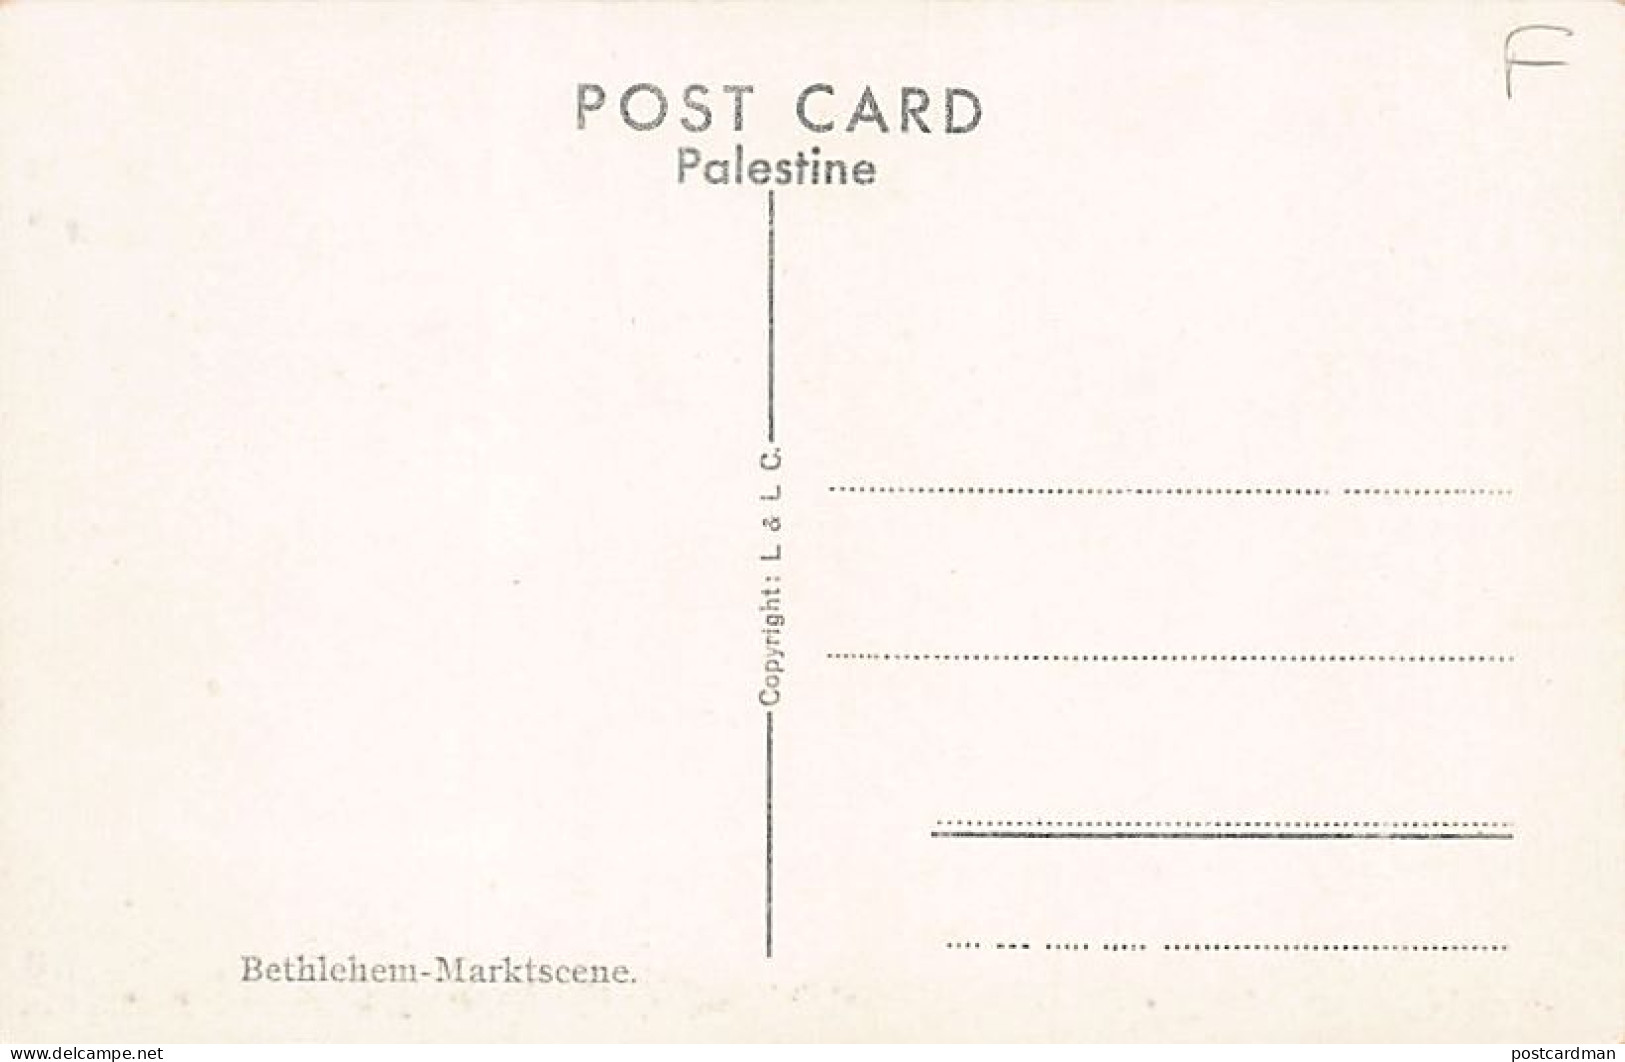 Palestine - BETHLEHEM - Market Scene - Publ. Lehnert & Landrock 3090 - Palestina